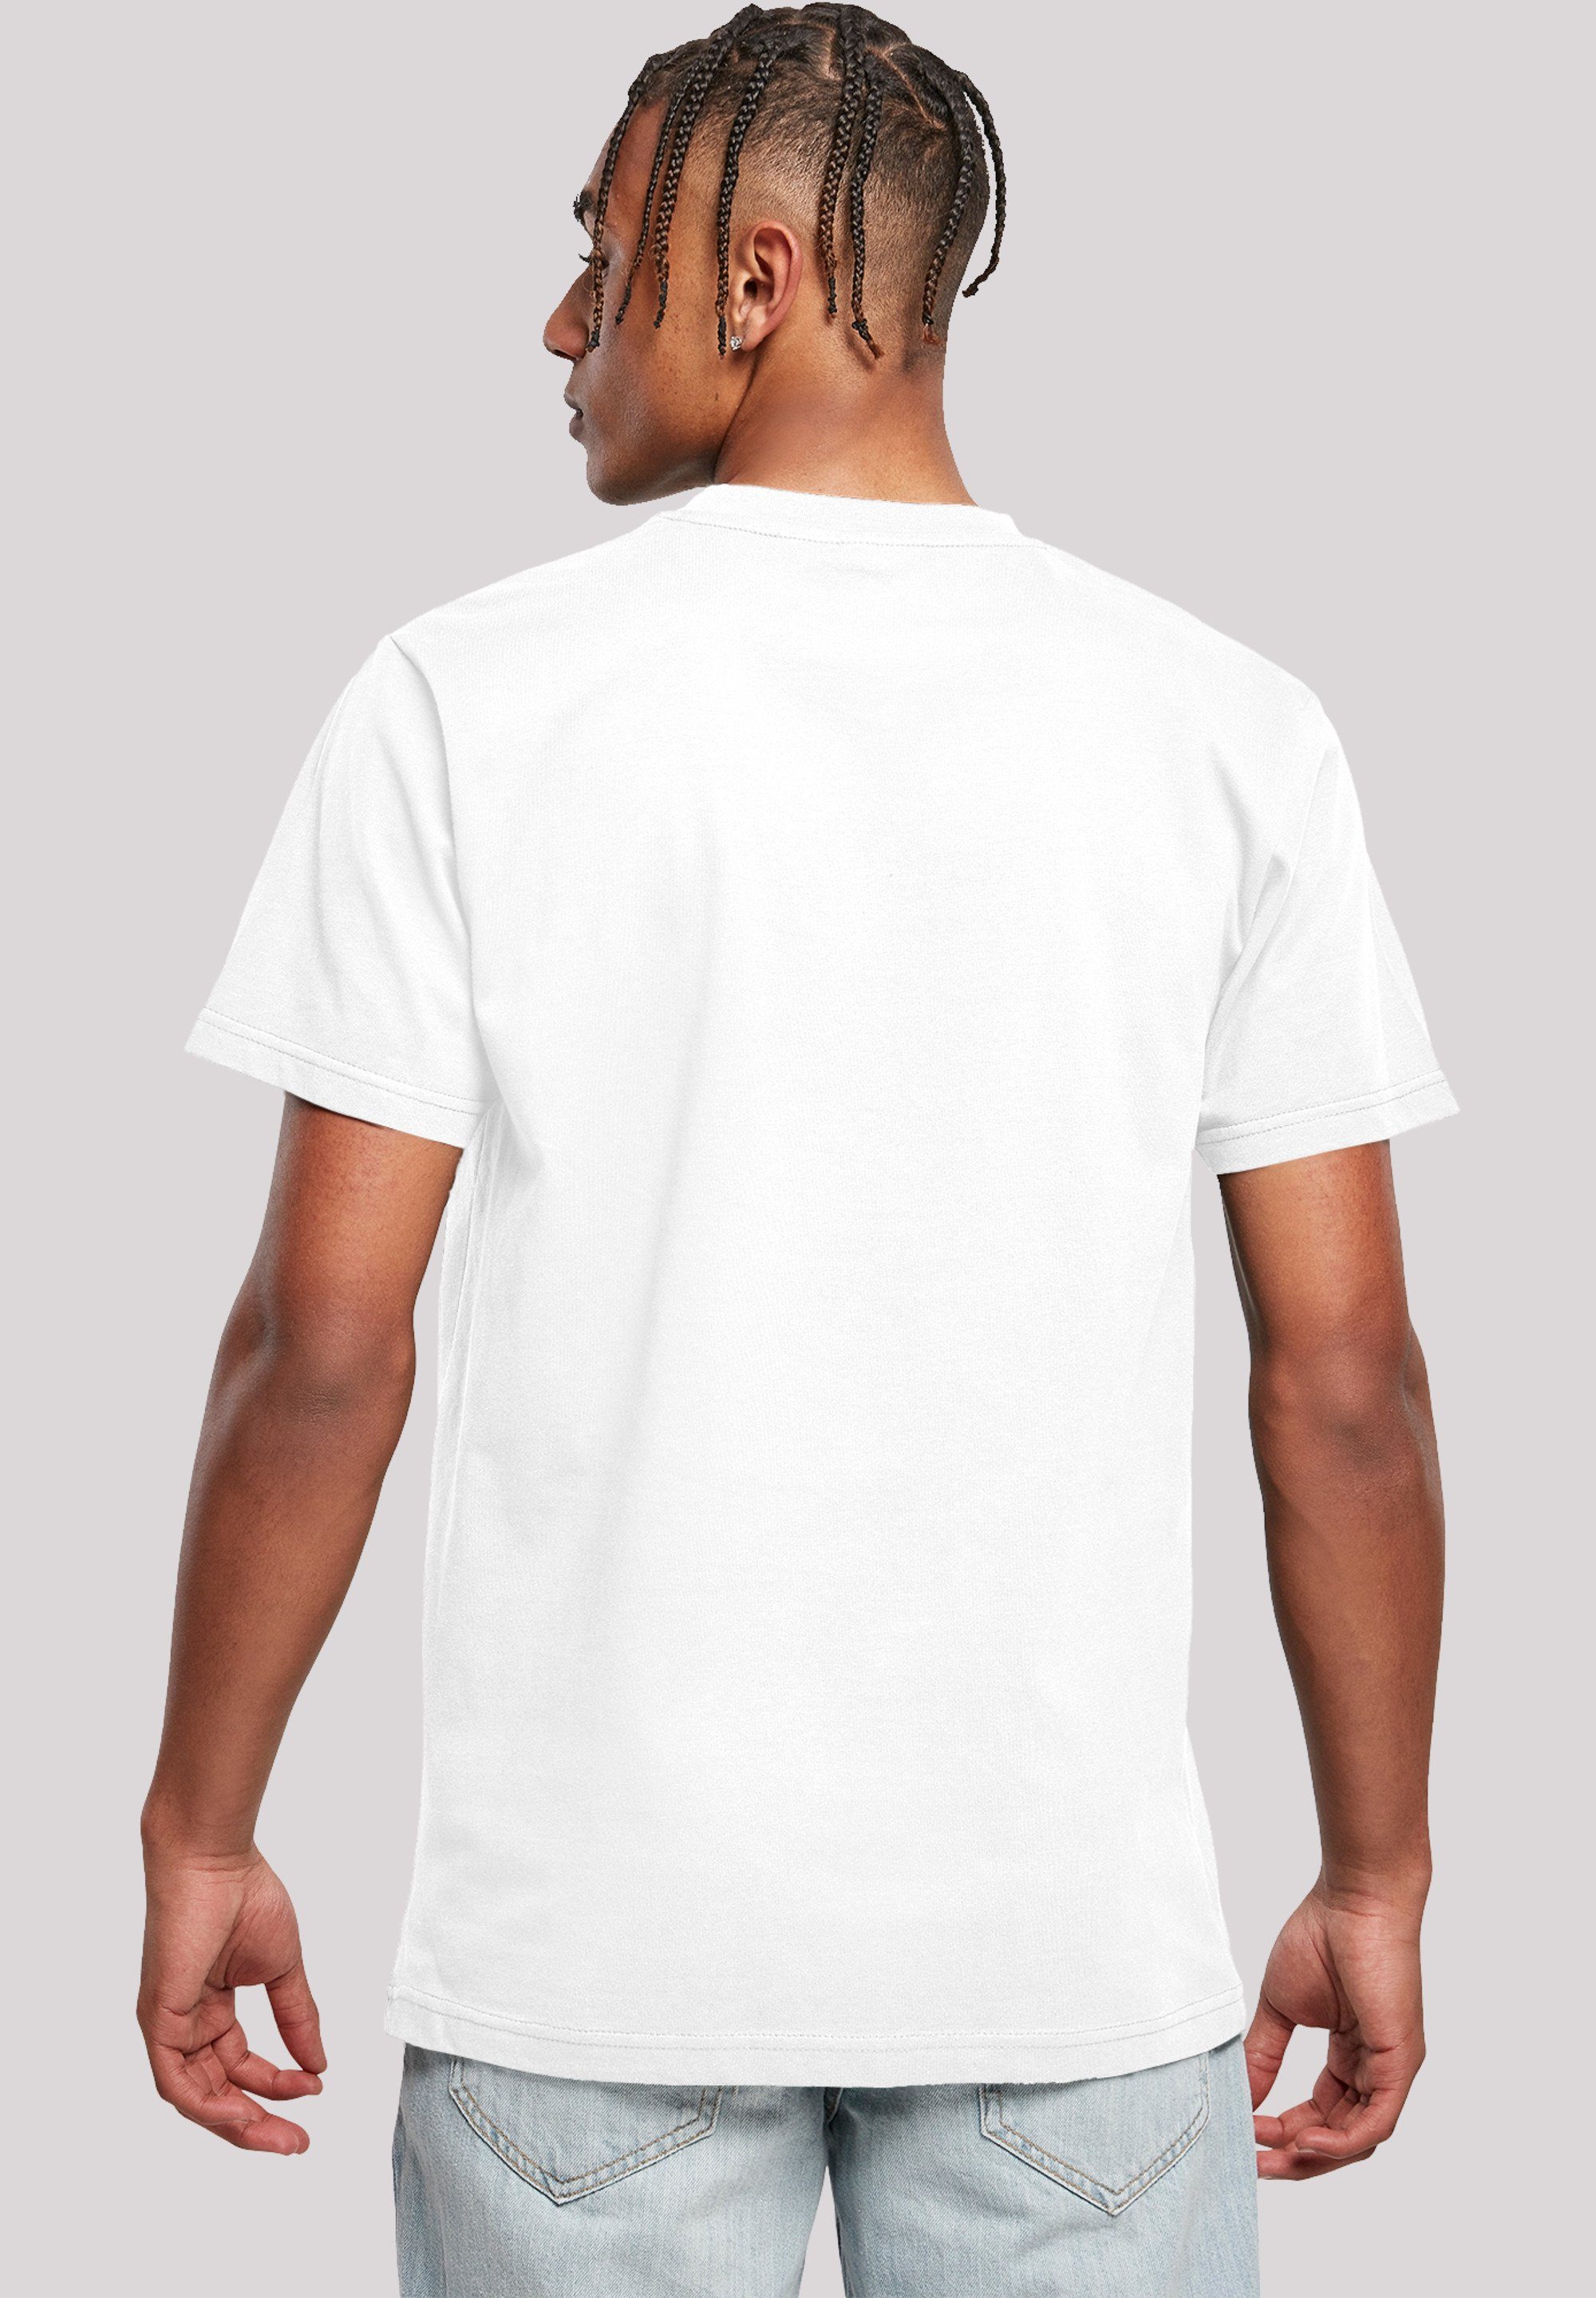 Wars Child Moods Mandalorian Merch,Regular-Fit,Basic,Bedruckt weiß Star T-Shirt F4NT4STIC Herren,Premium